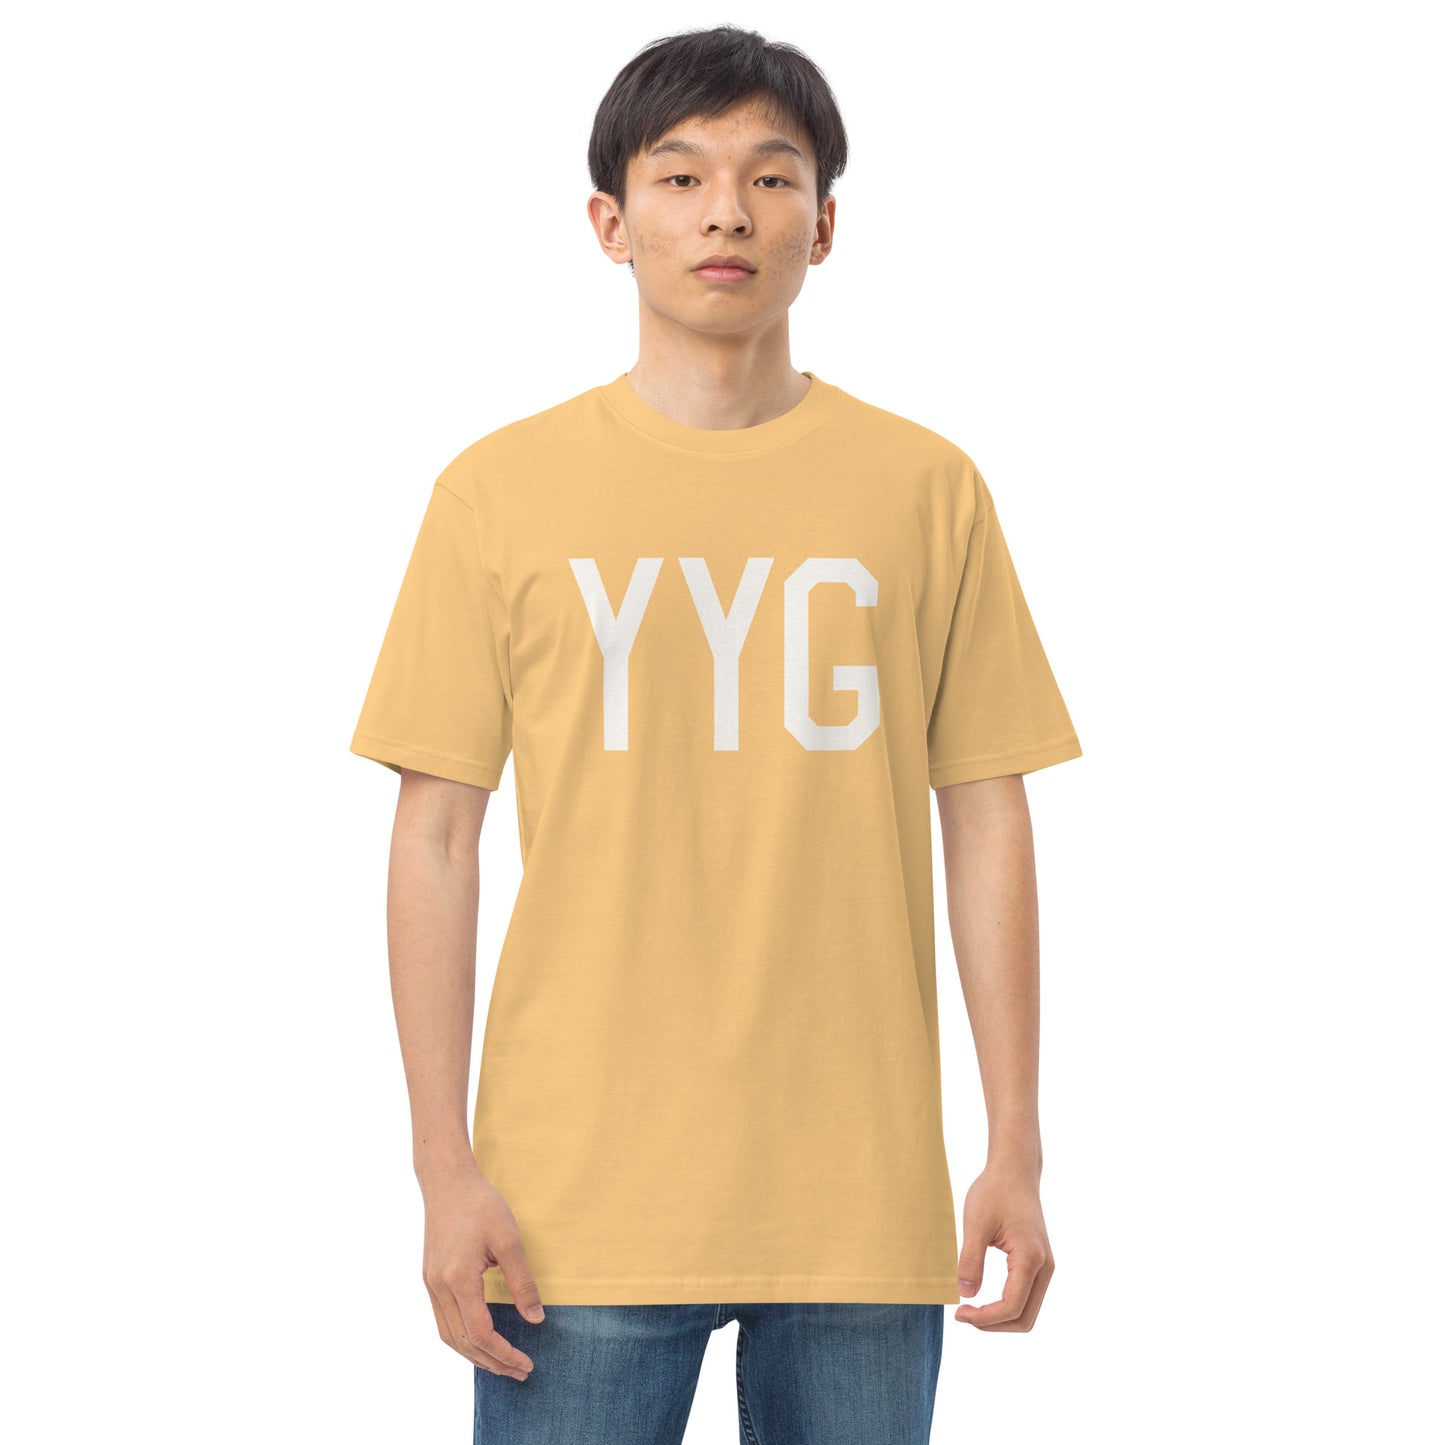 YYG Charlottetown Prince Edward Island Men's Premium Heavyweight T-Shirt